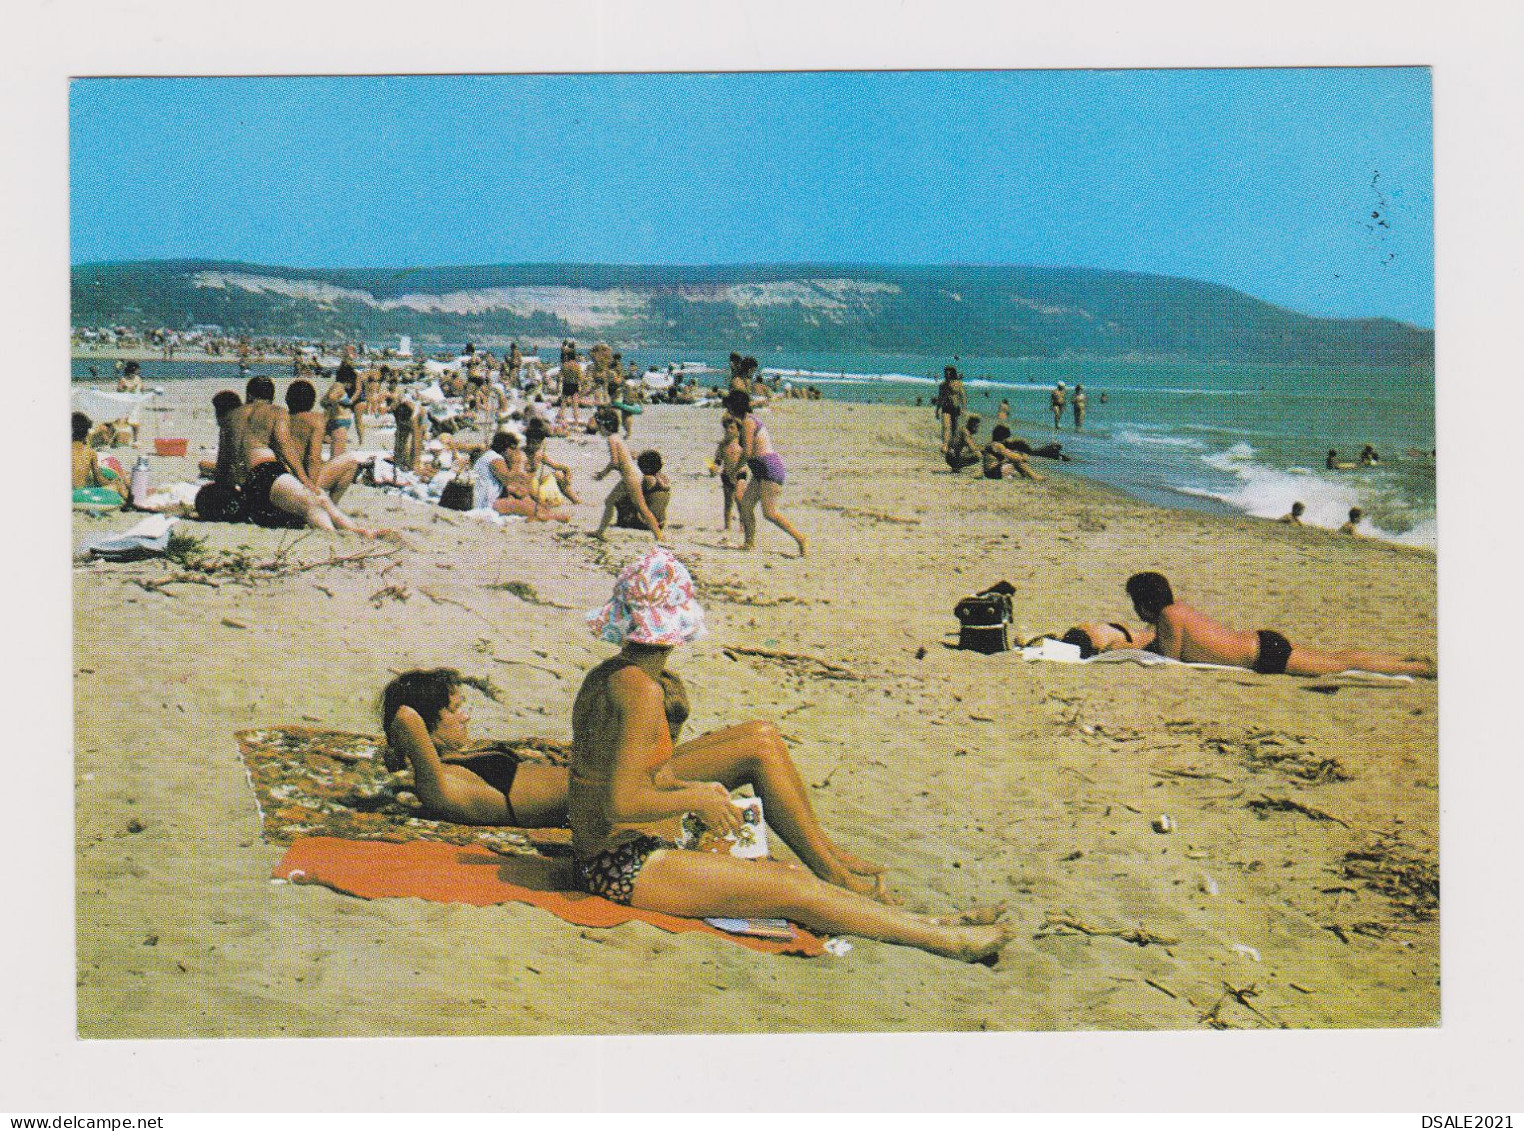 Two Sexy Women, Ladies With Swimwear, Bikini, Summer Beach Relaxing, Vintage Photo Postcard RPPc Pin-Up (66690) - Pin-Ups